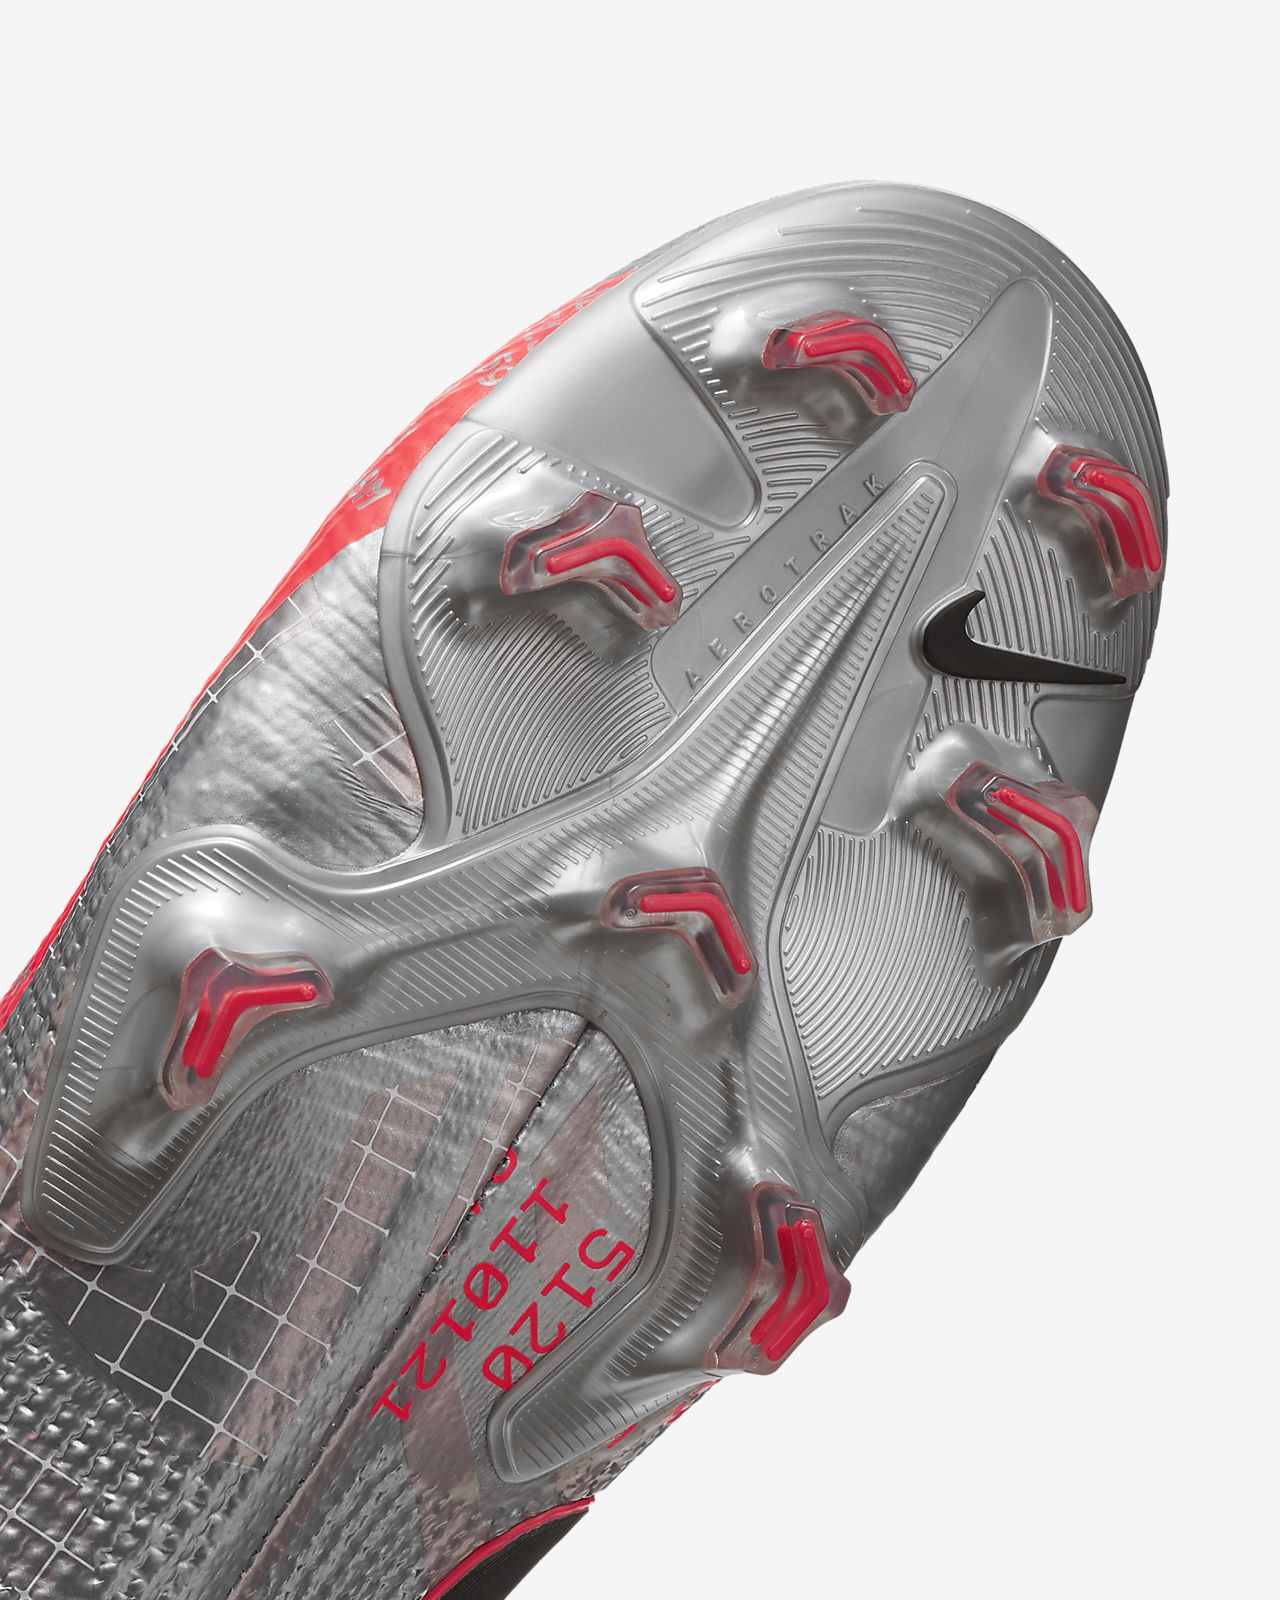 Nike Mercurial Vapor 13 Elite FG Soccer Cleats. Amazon